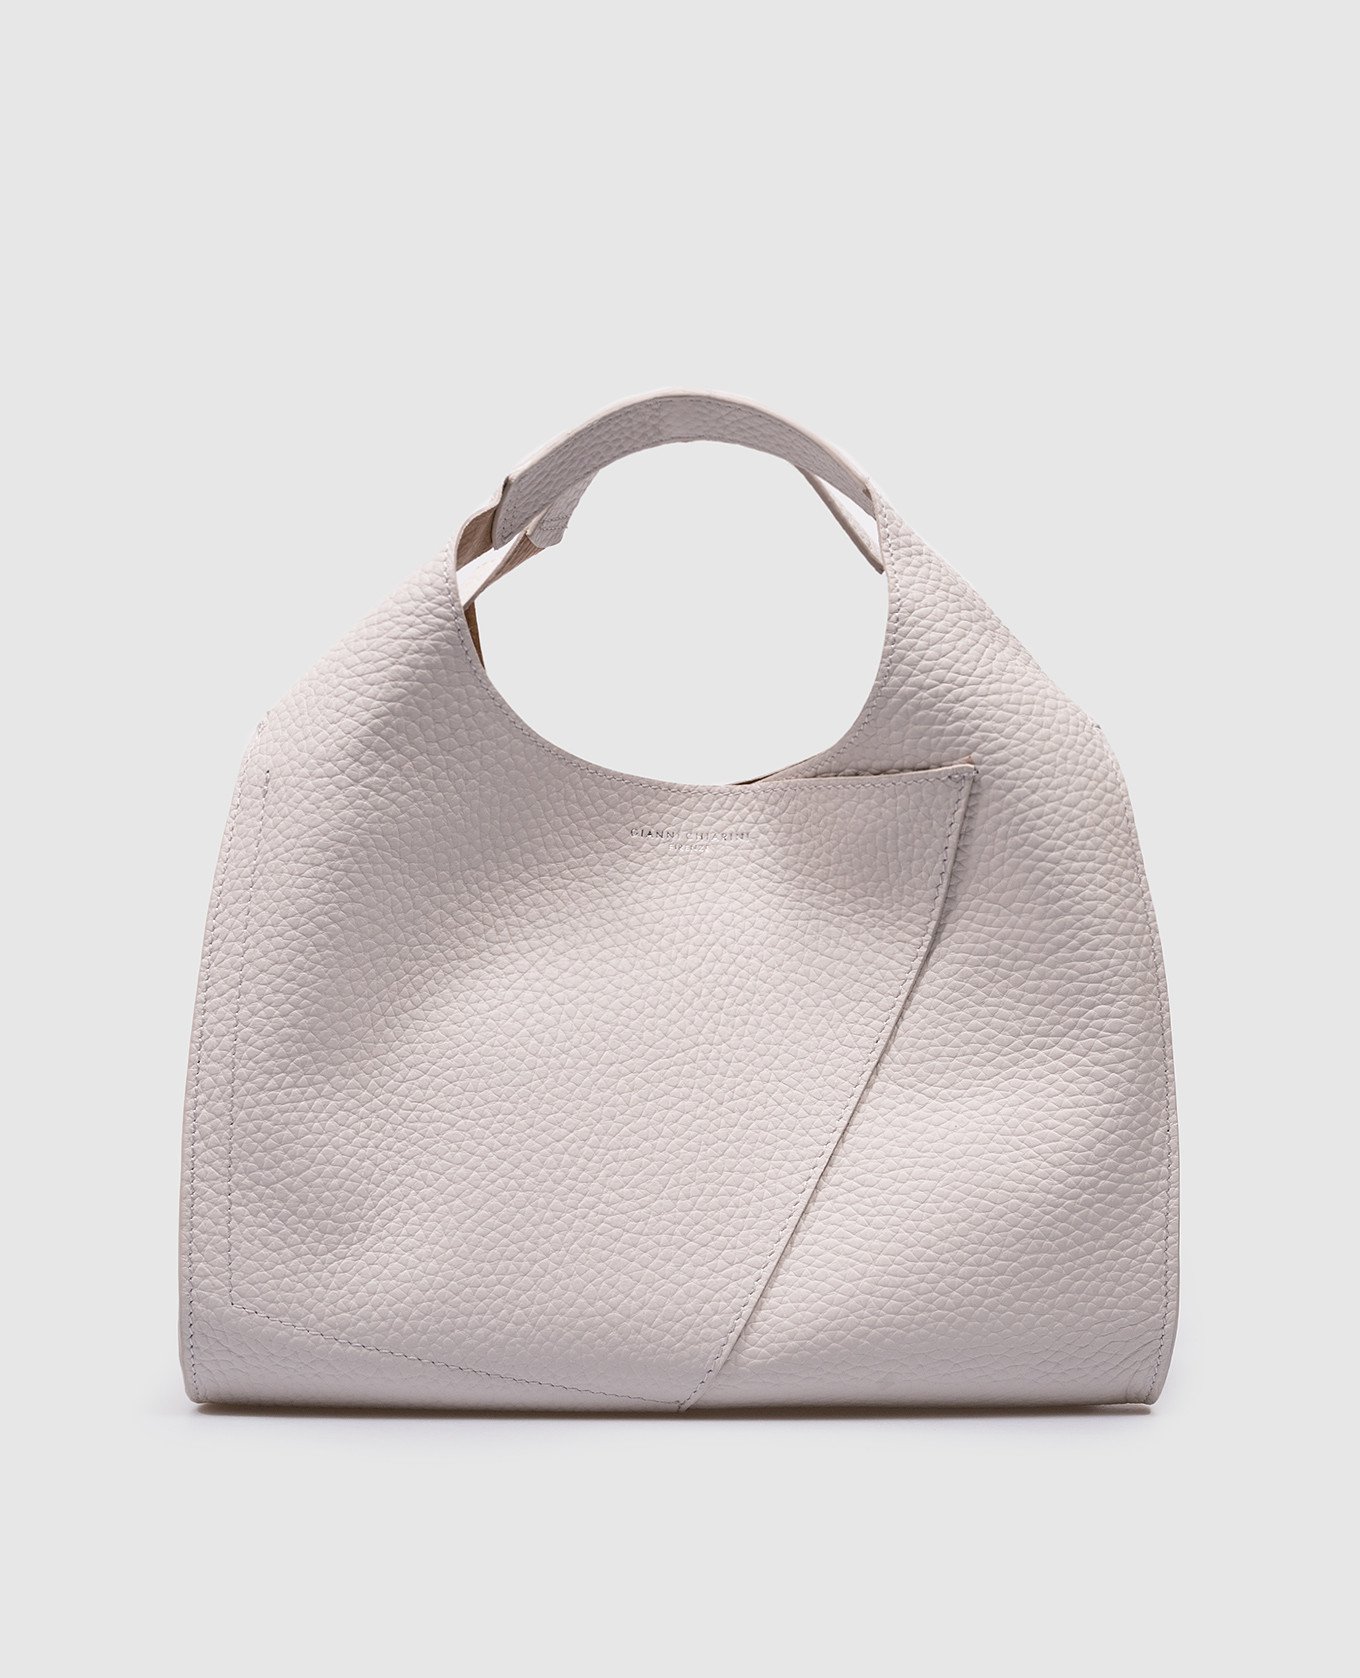 Euforia white embossed leather bag